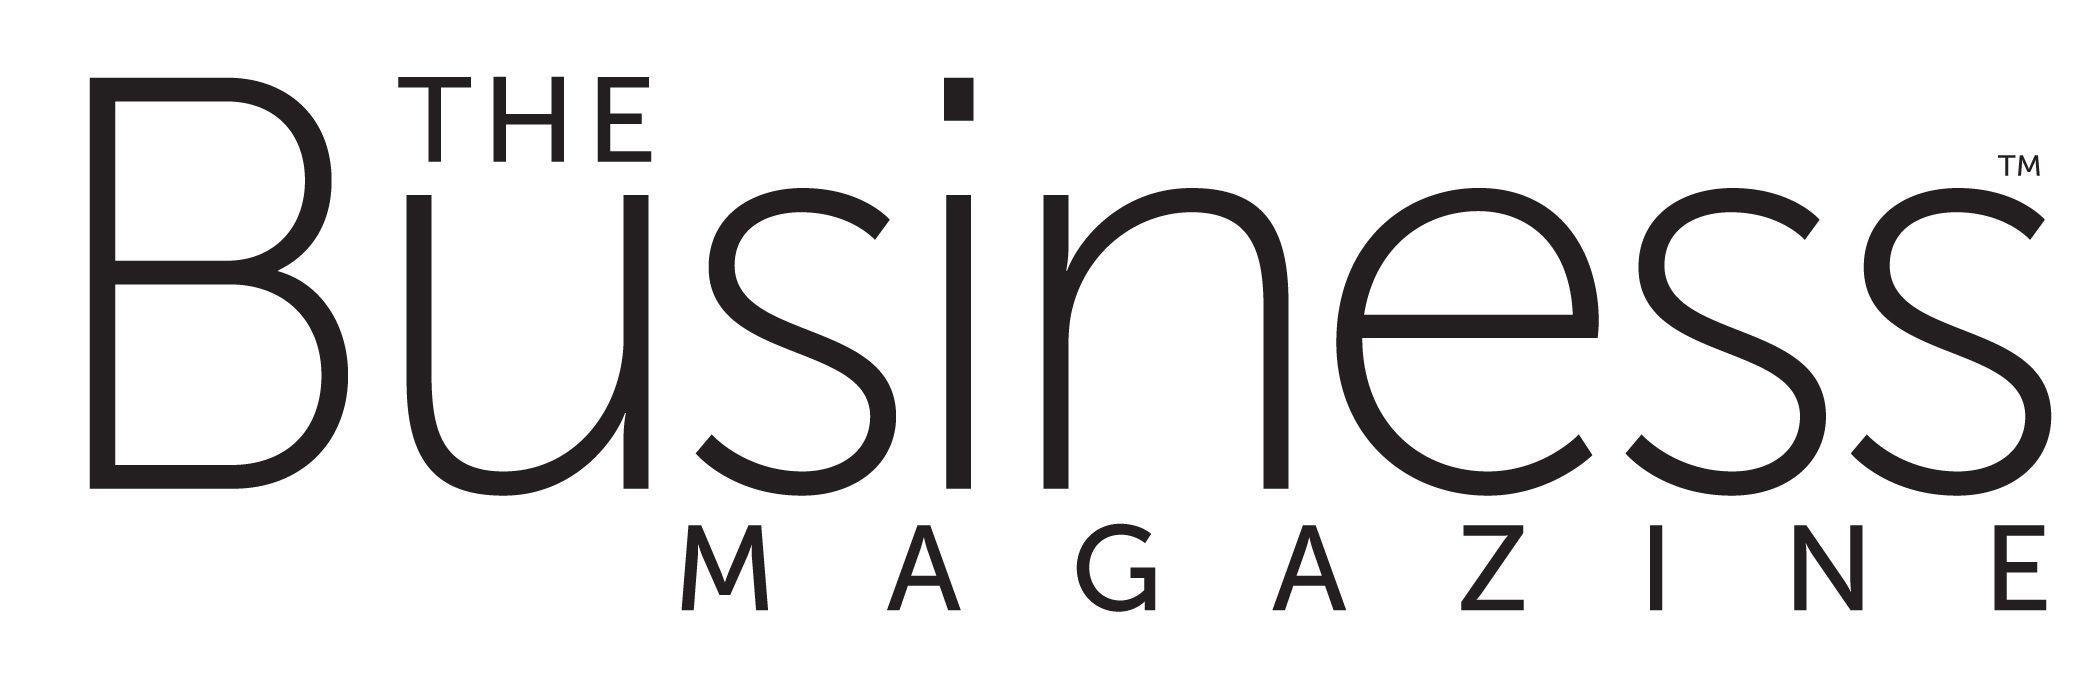 Black Business Logo - The Business Magazine | Bus Mag black logo - The Business Magazine